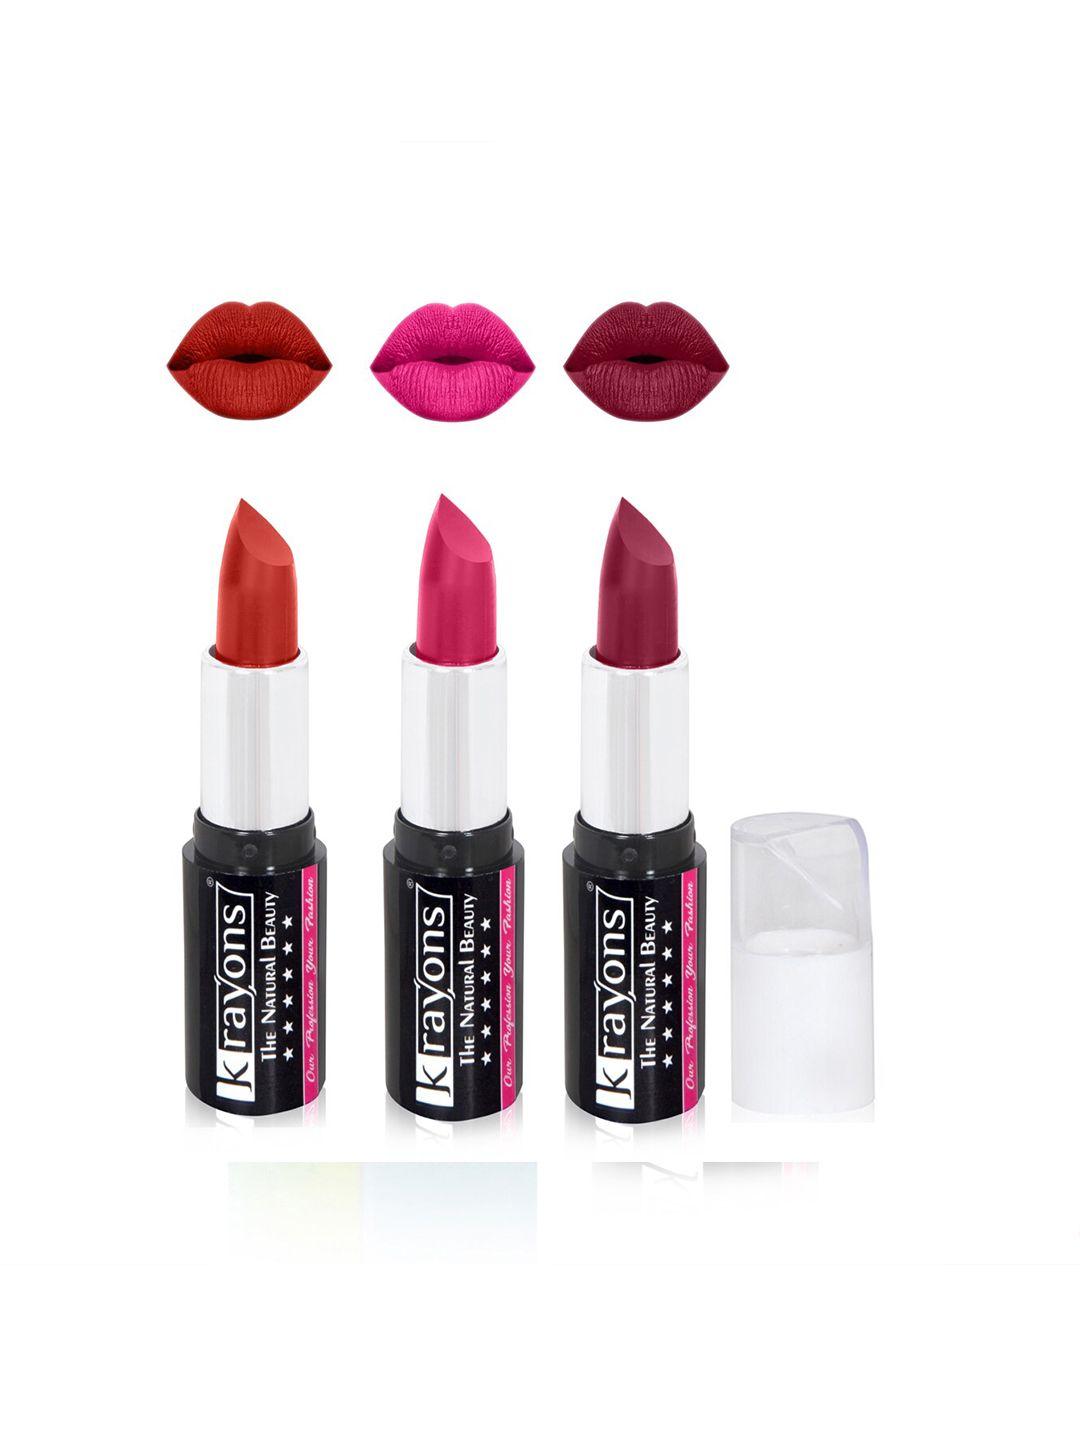 krayons set of 3 the natural beauty moisturizing & long-lasting matte lipstick - 4 g each